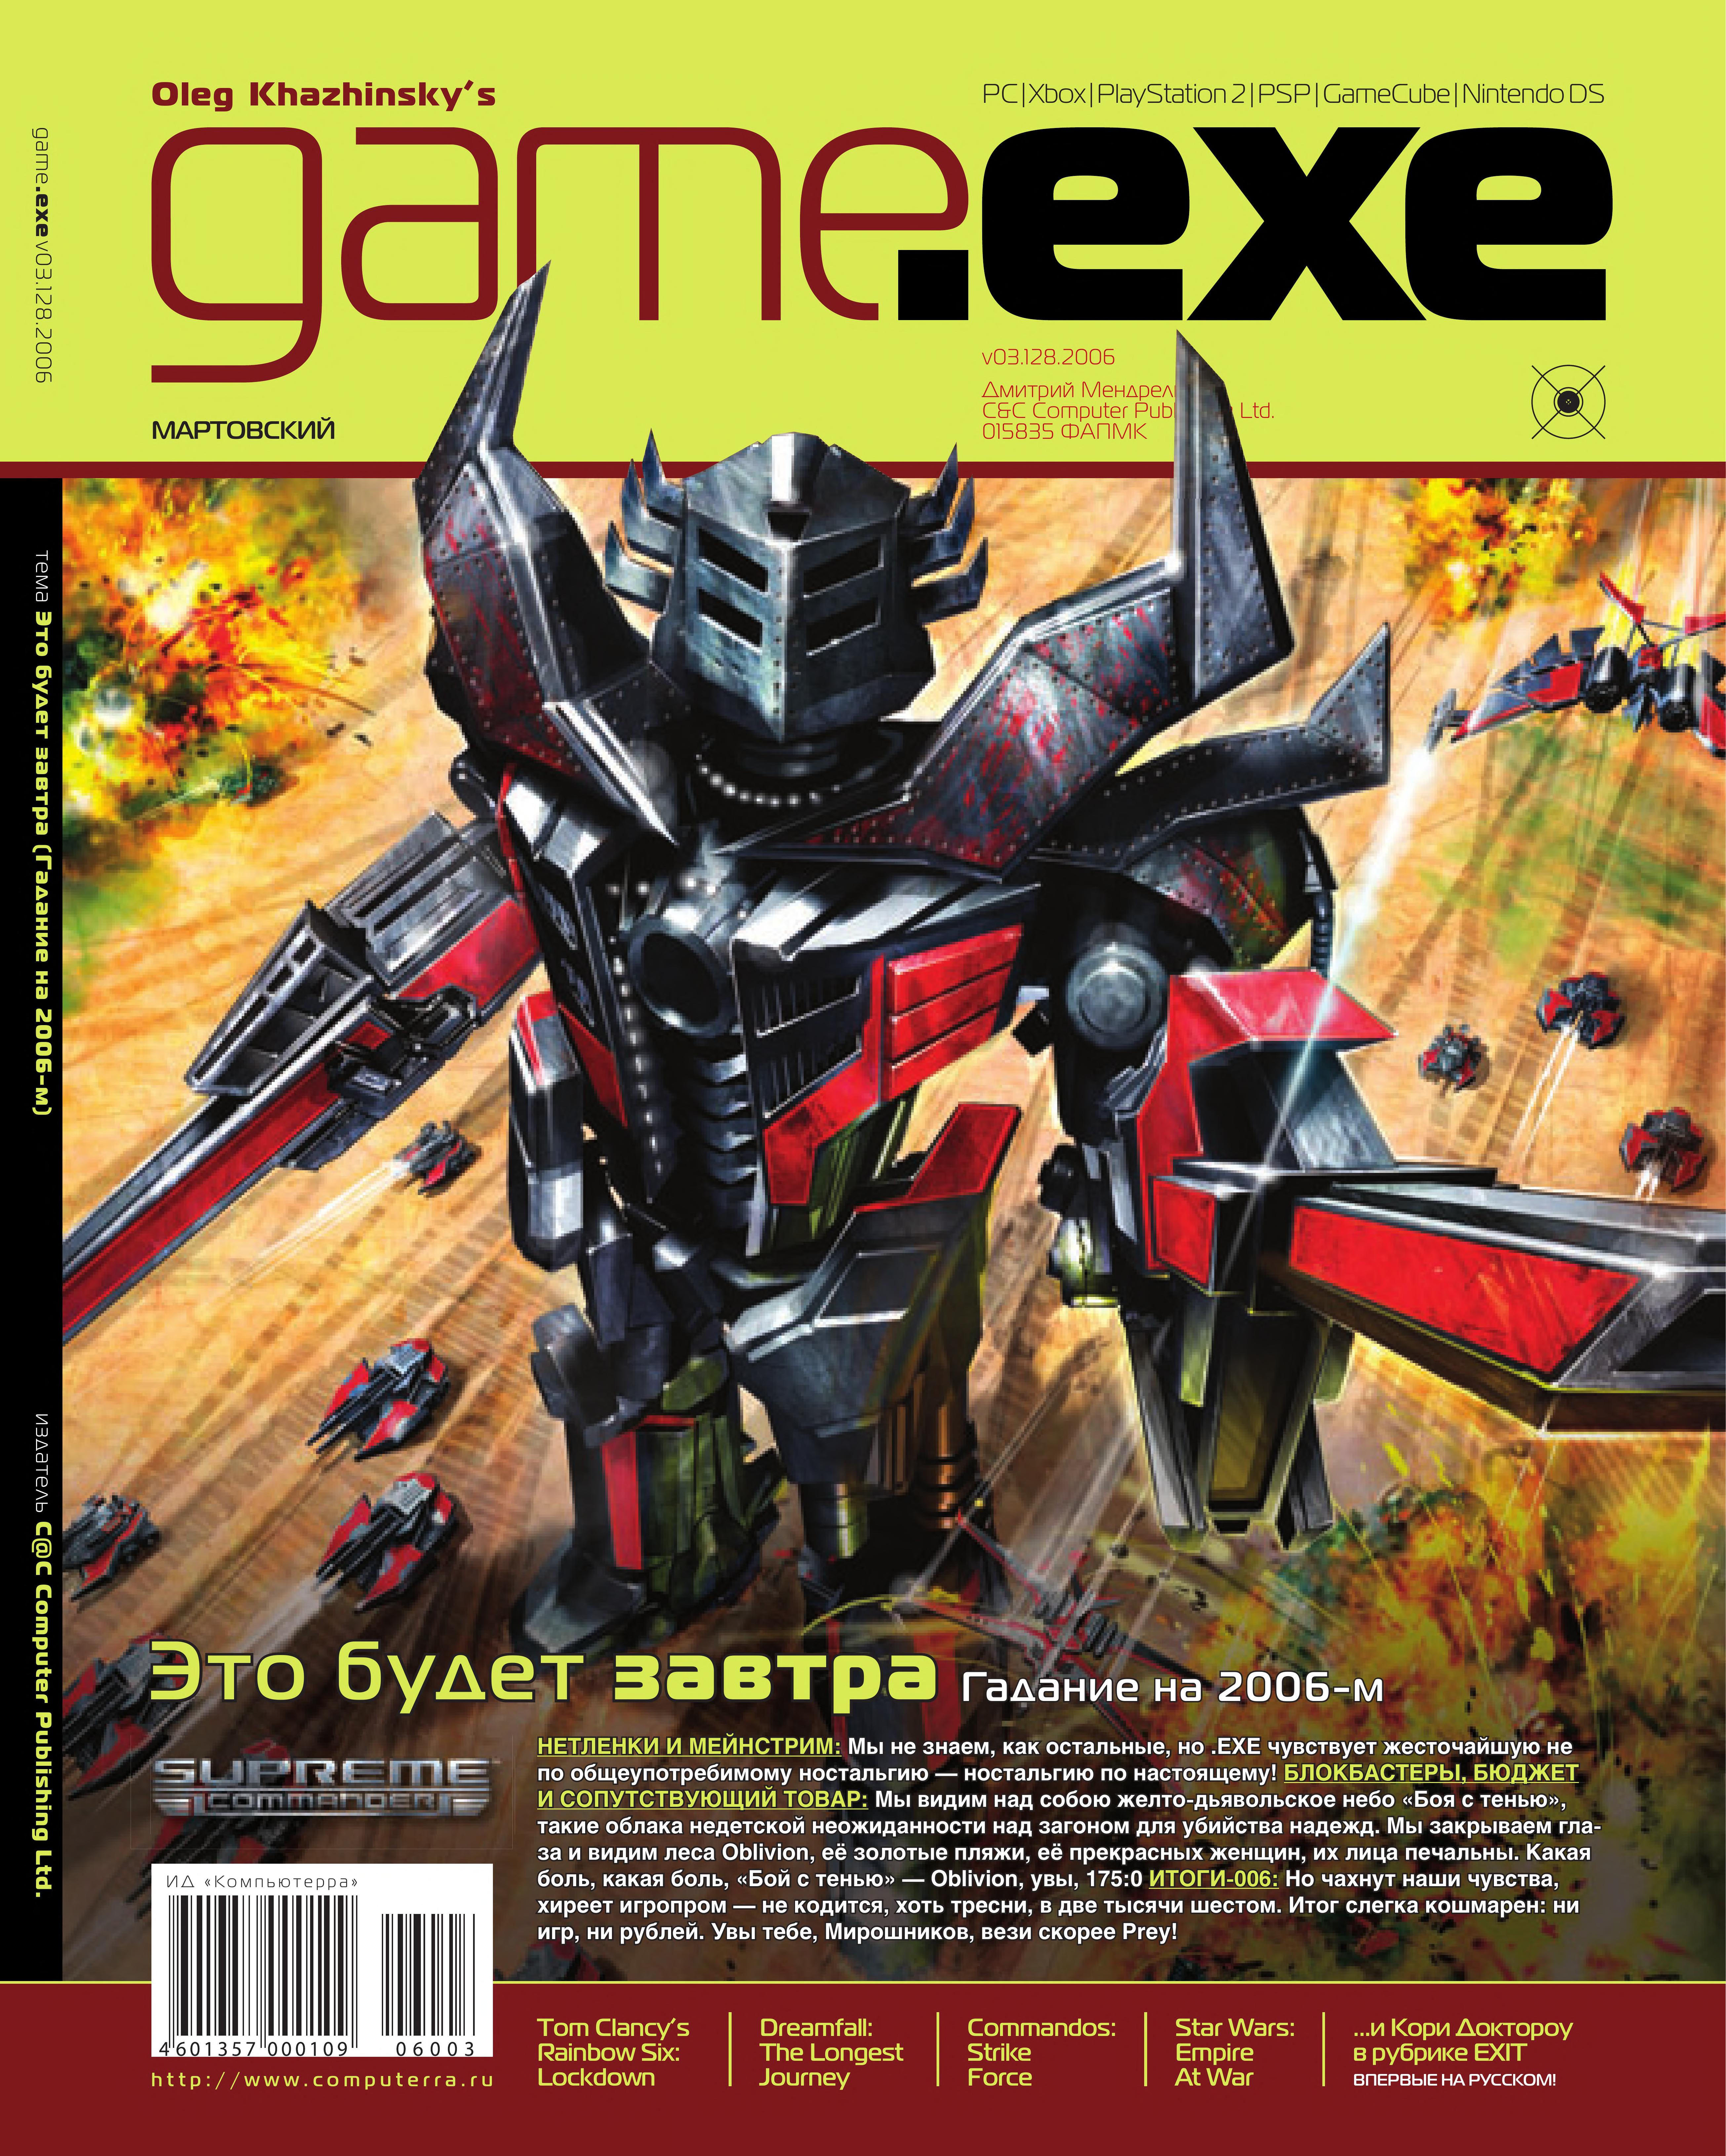 Download game exe. Game.exe. Game exe журнал. Game exe 2000. Game exe журнал 2005.